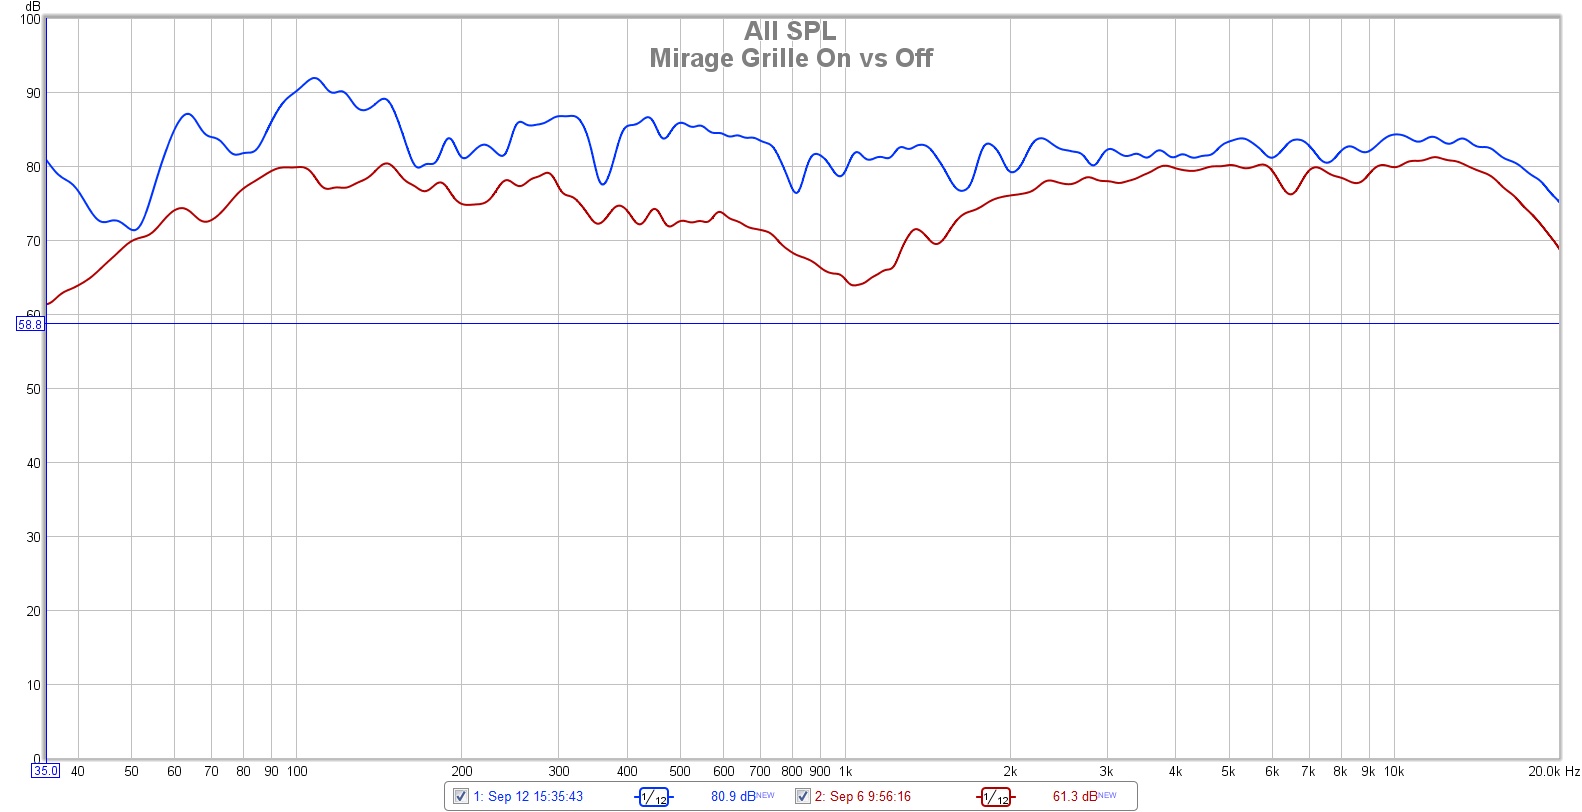 Mirage Grille On vs Off.jpg